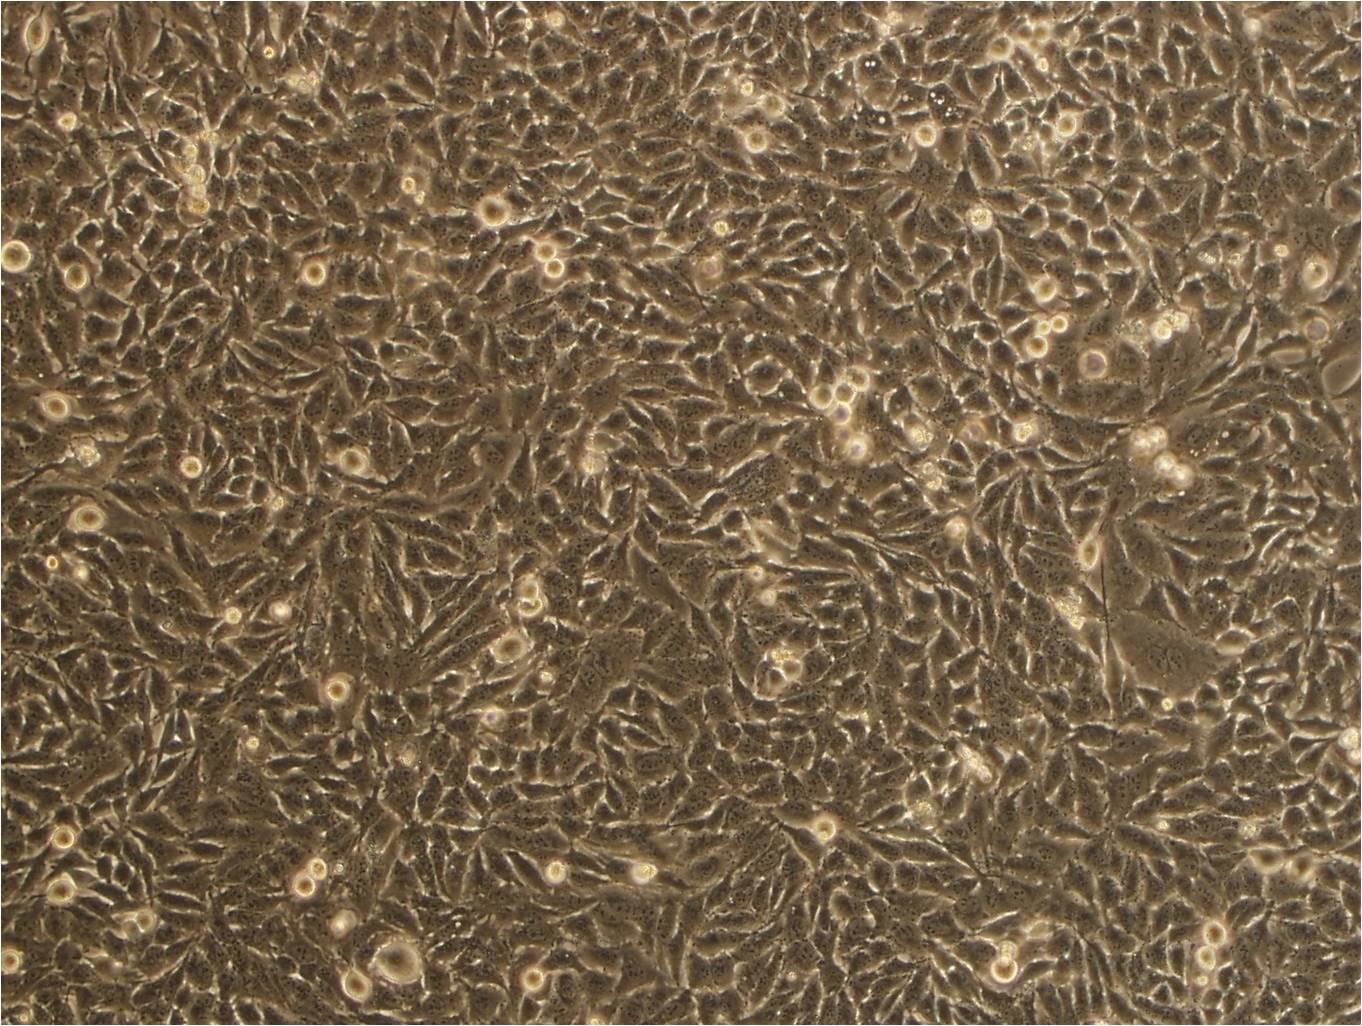 SHIN-3 Cells(赠送Str鉴定报告)|人卵巢浆液性囊腺癌细胞,SHIN-3 Cells